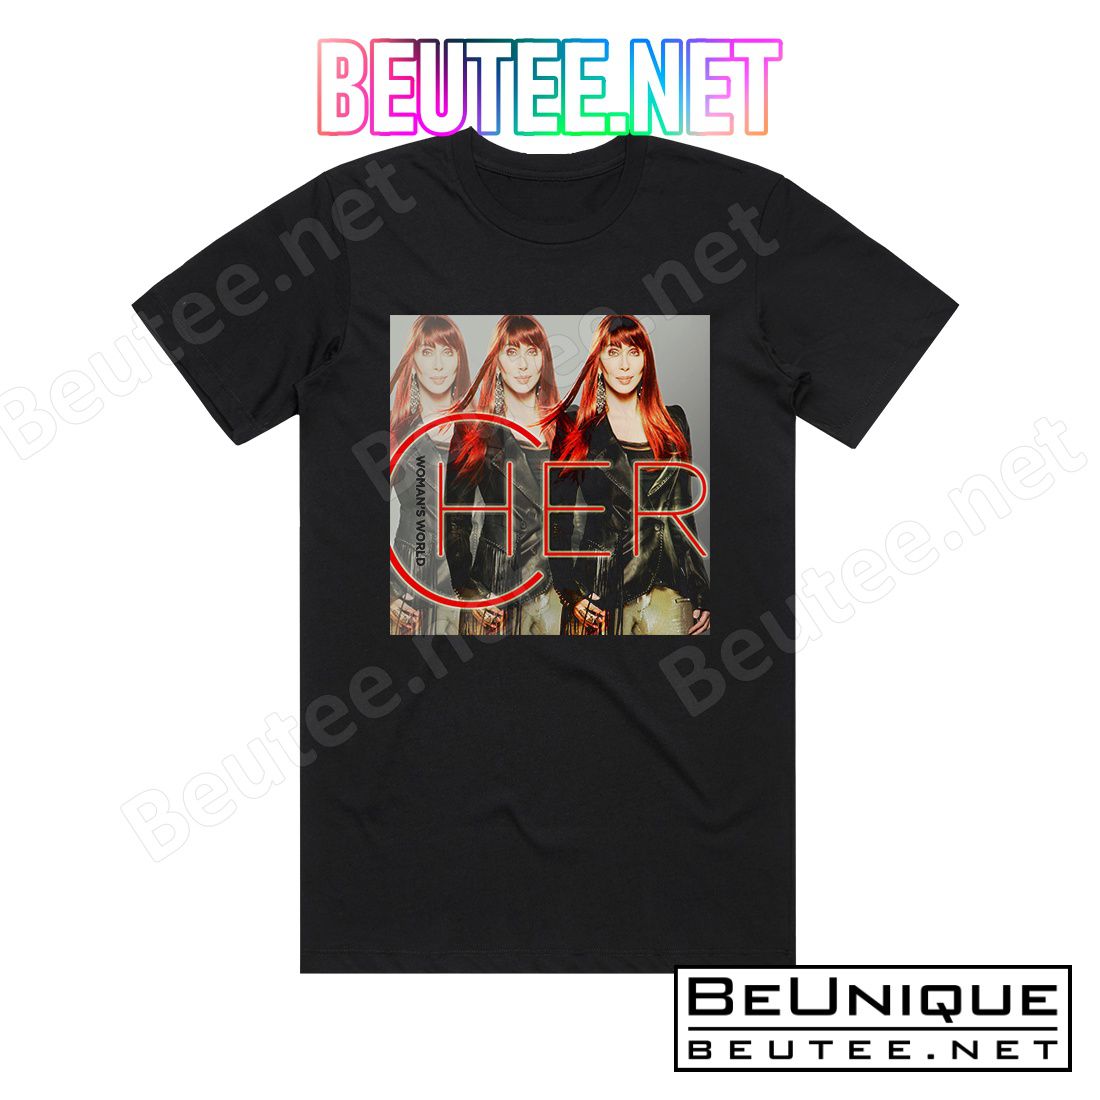 Cher Woman's World 2 Album Cover T-Shirt